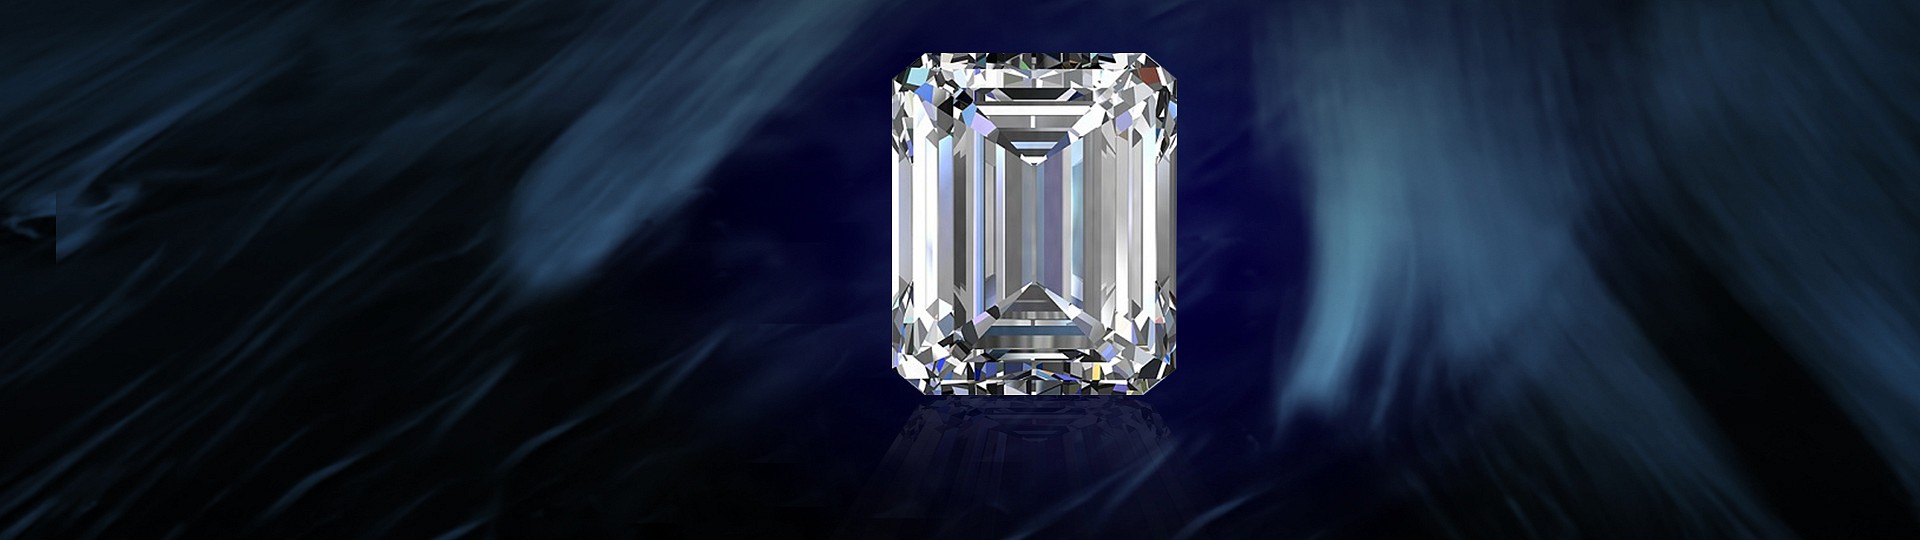 ‘Creme De La Creme' Investment GIA Diamonds by Bid Global International Auctioneers LLC